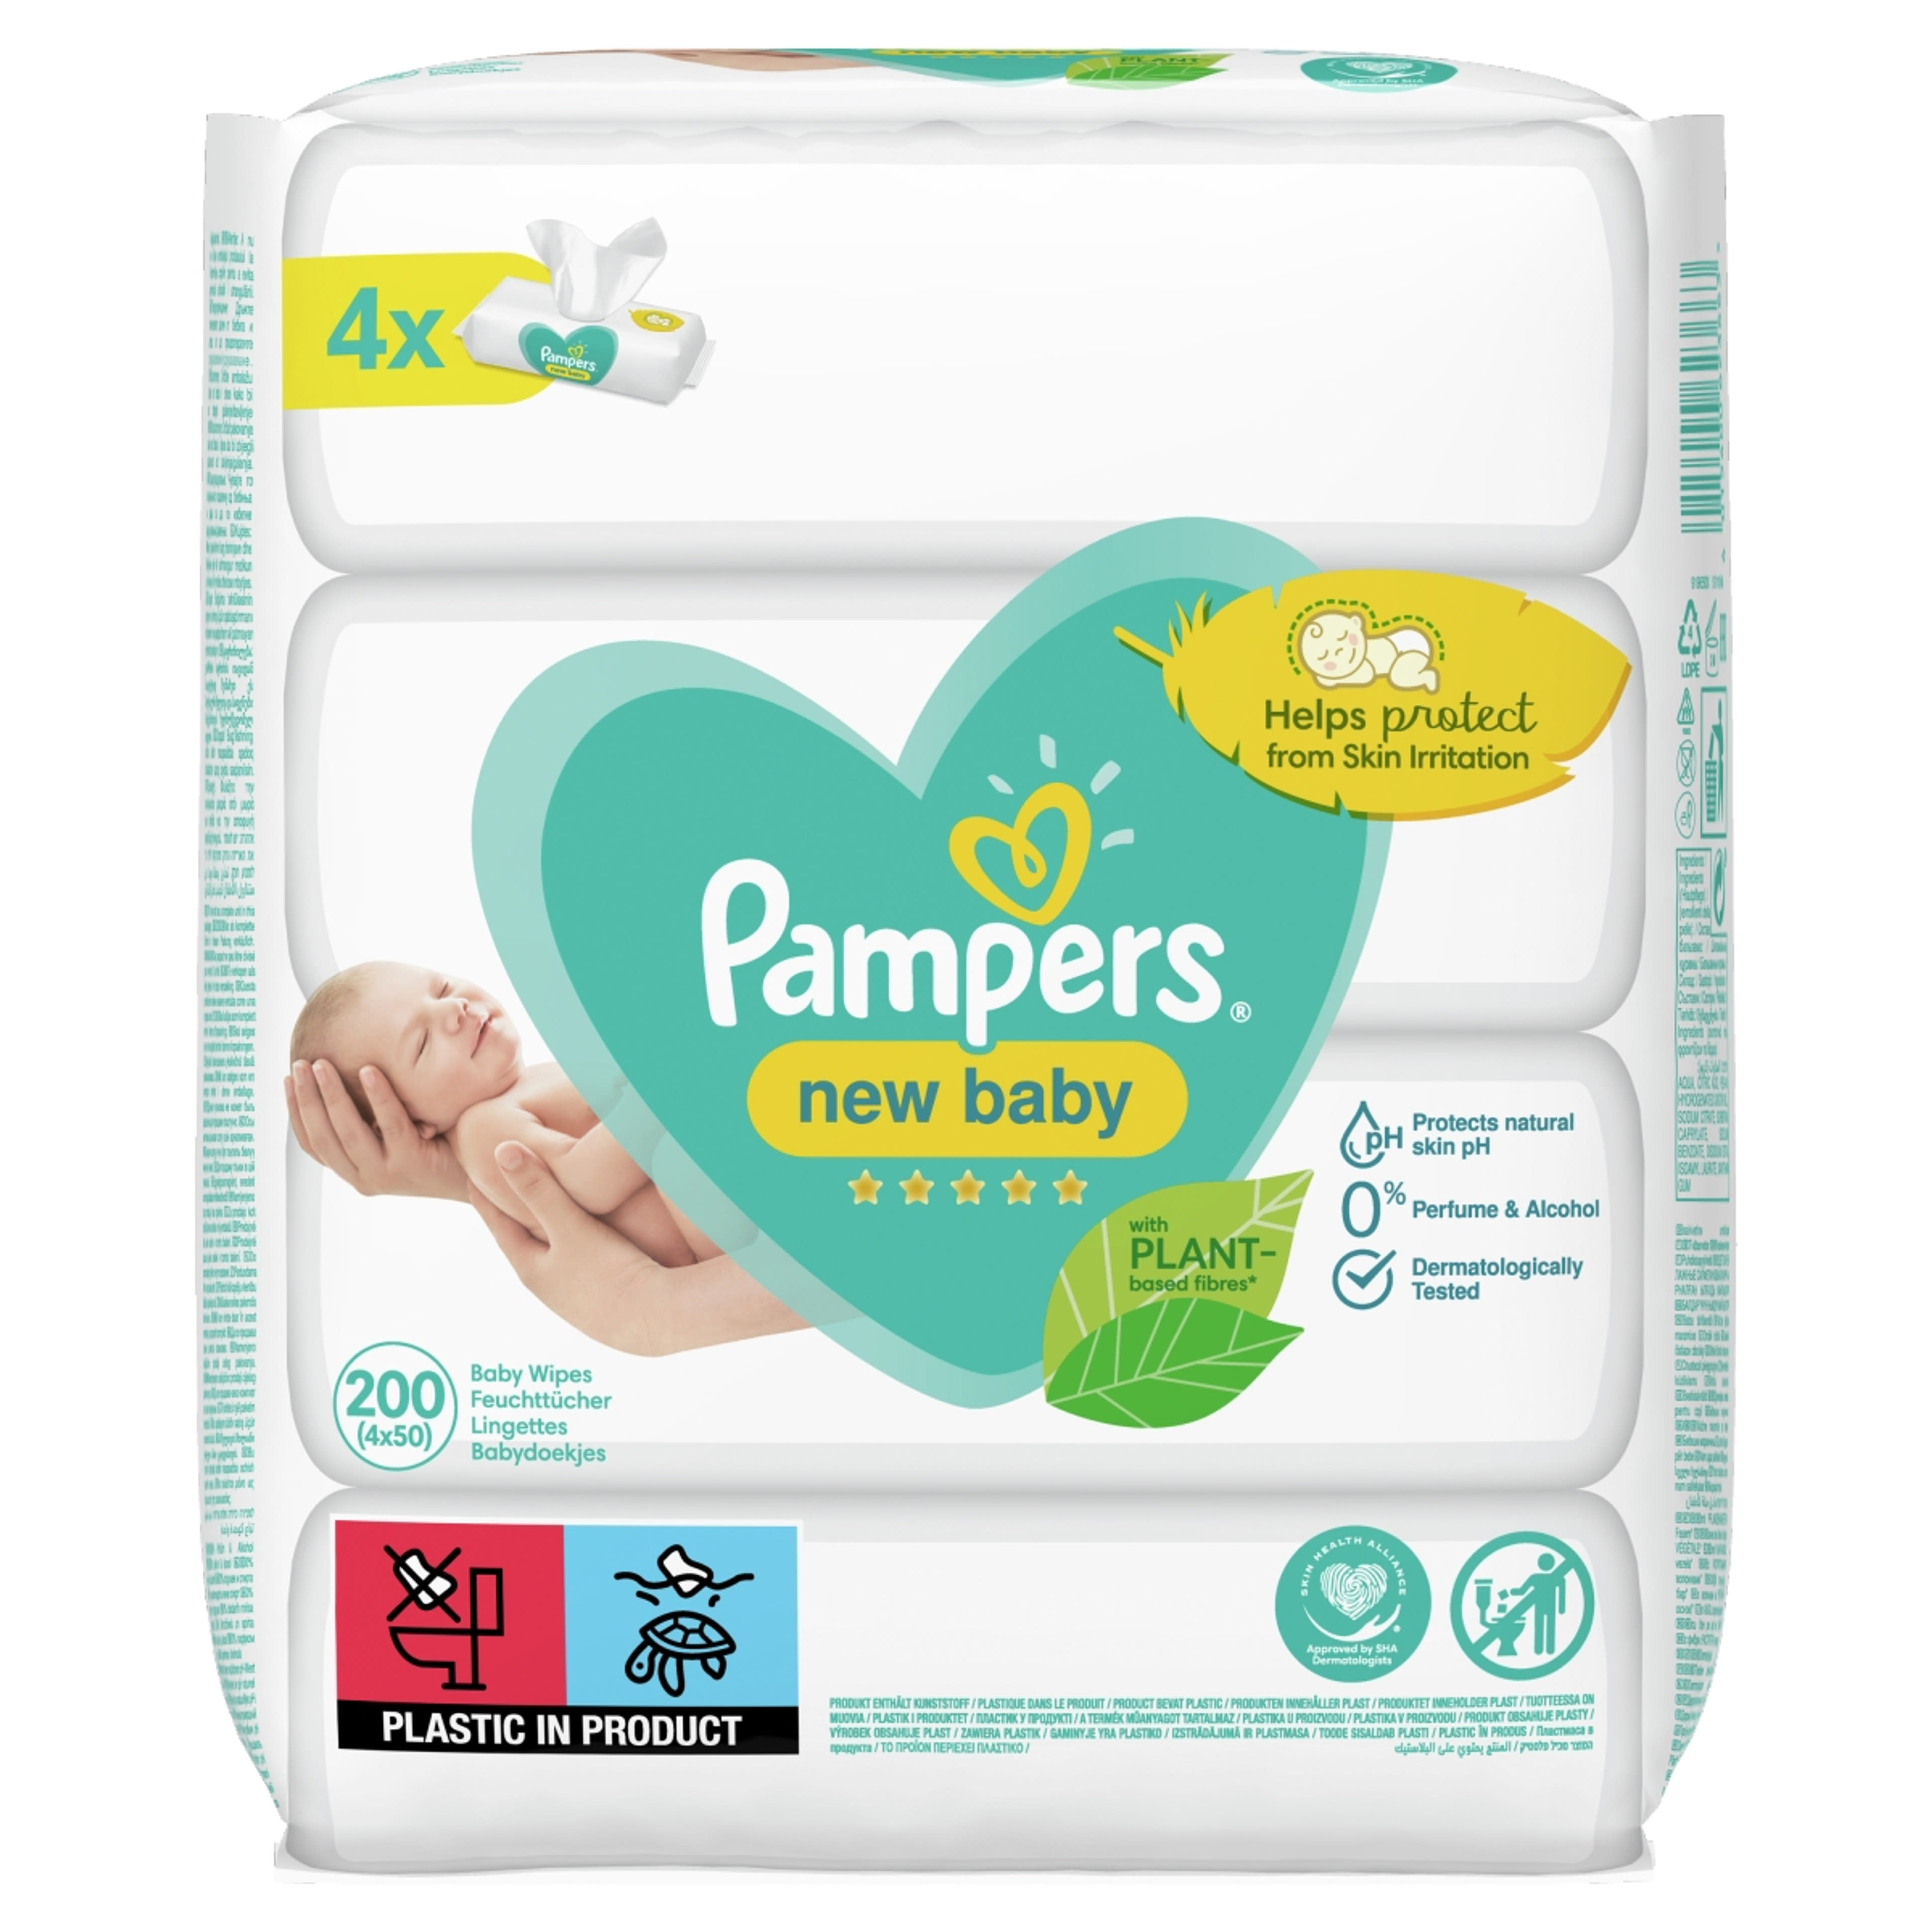 Pampers Sensitiv New Baby törlőkendő (4x50) - 200 db-1